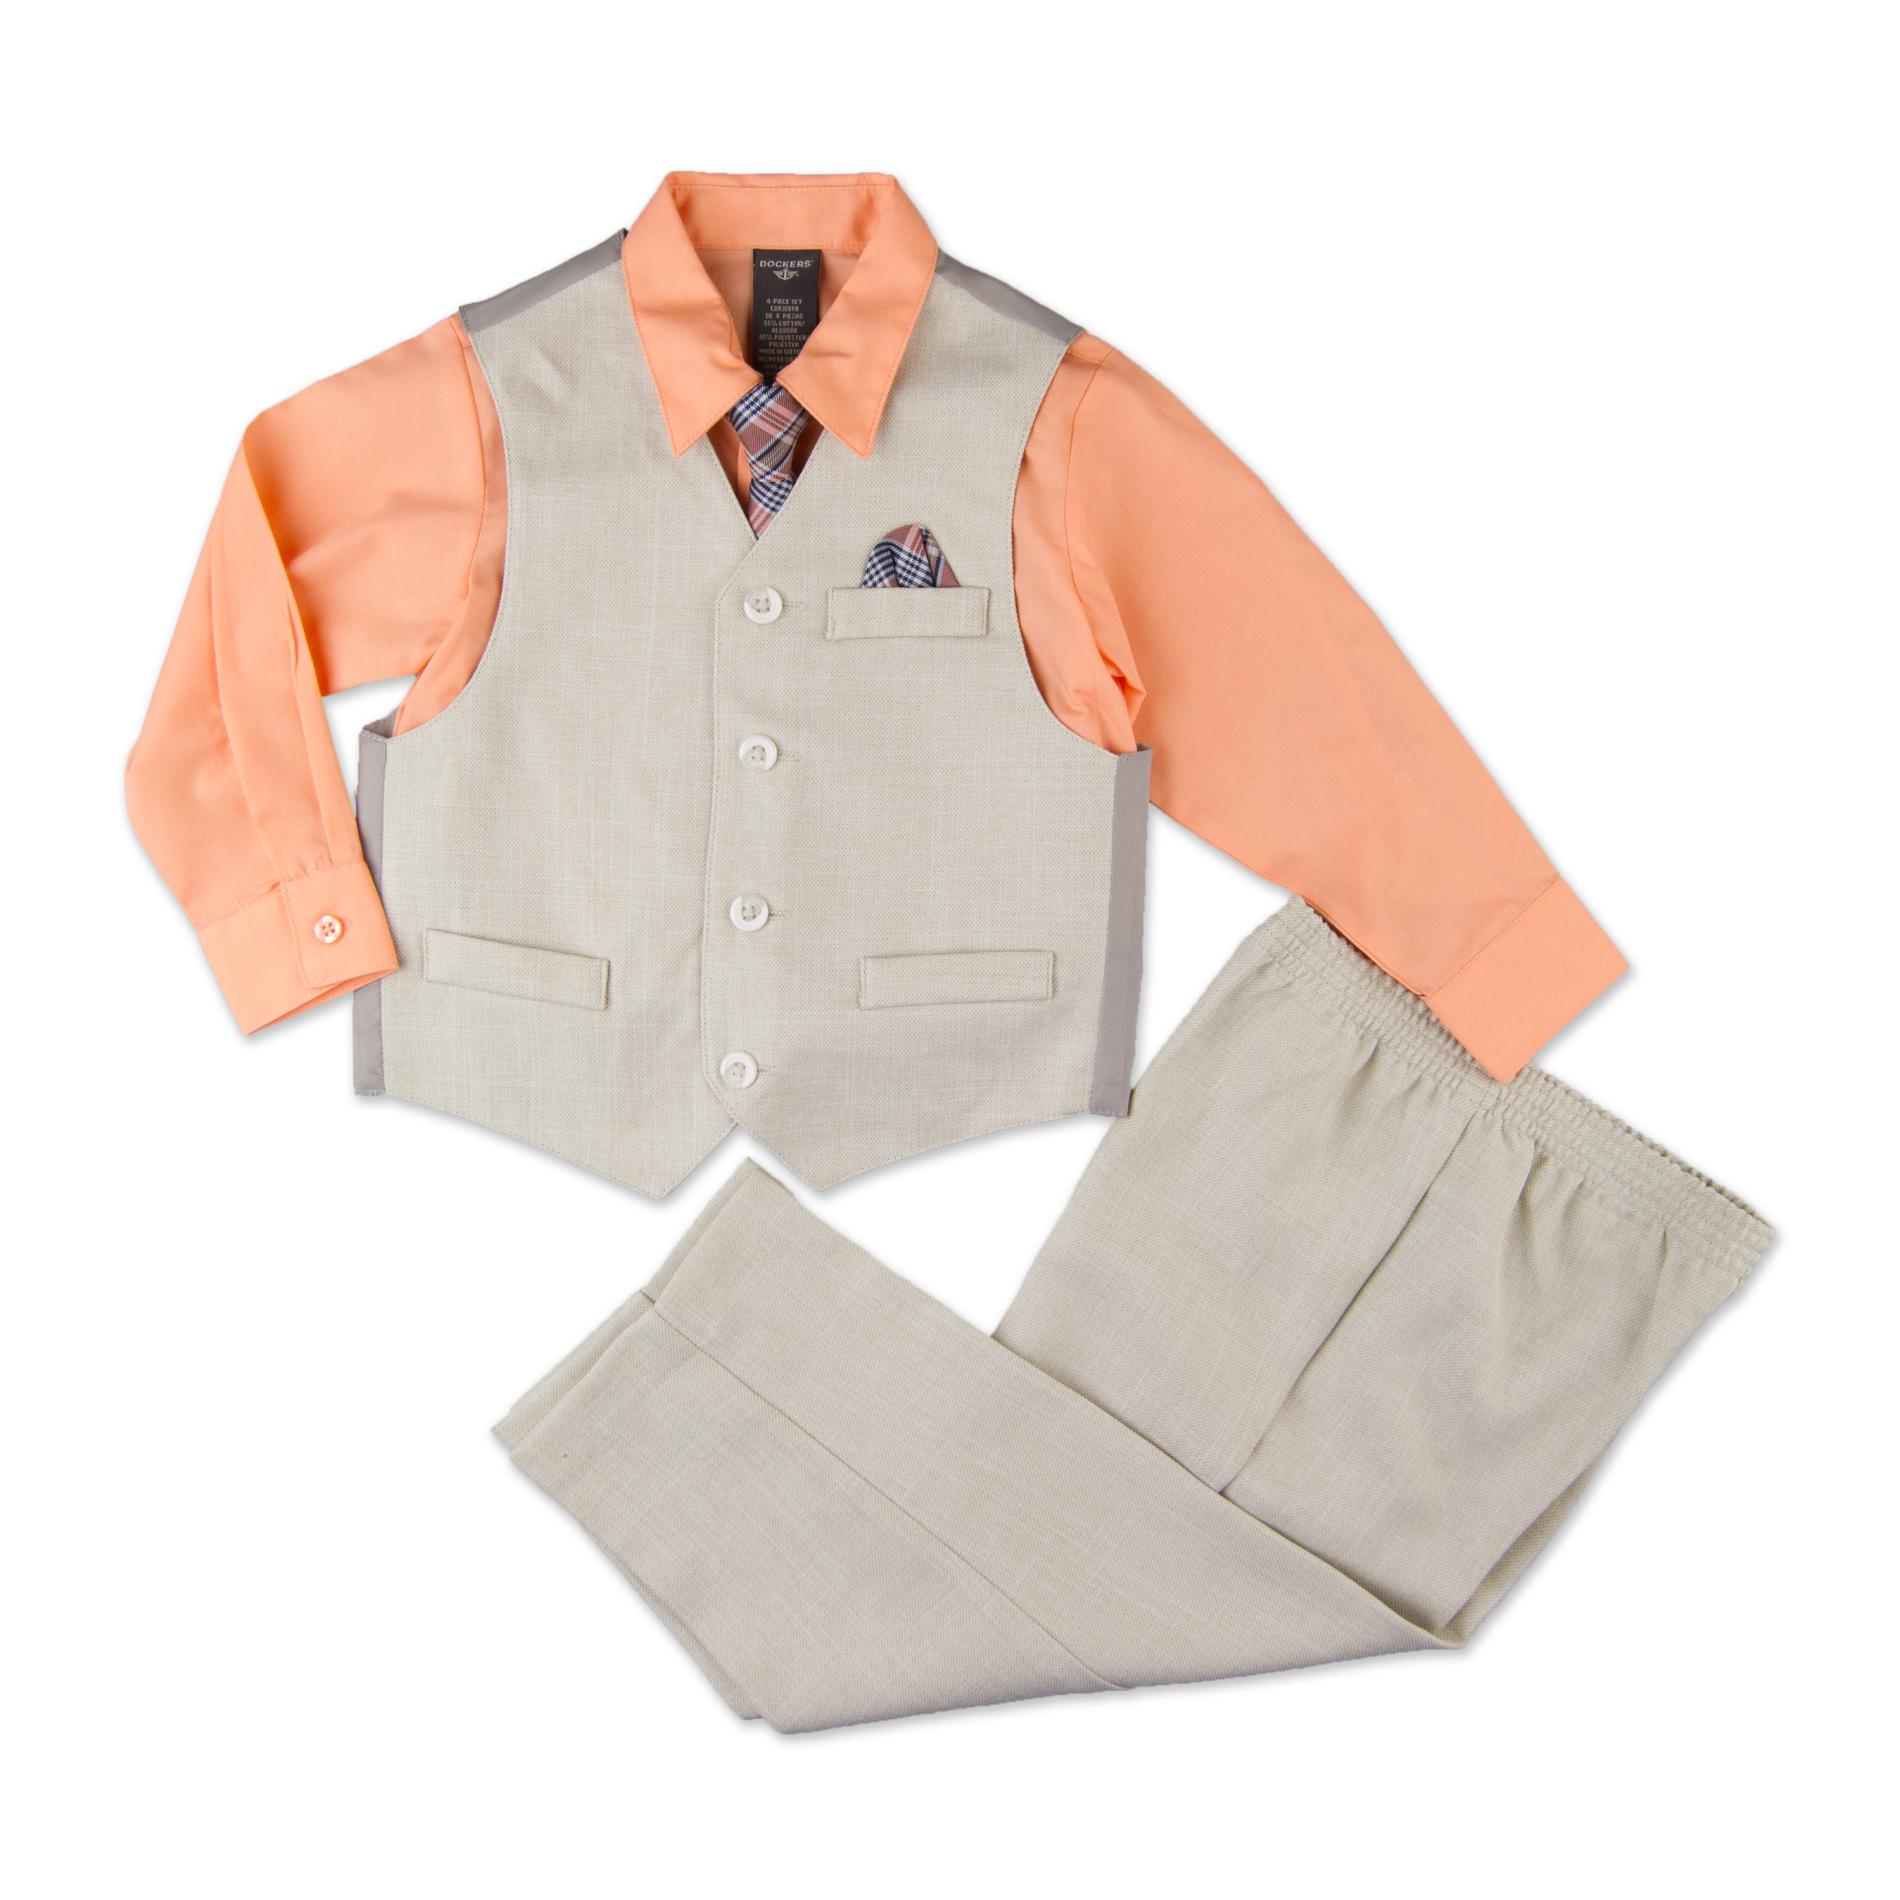 Dockers Newborn  Infant & Toddler Boy's Vest  Pants  Shirt & Tie